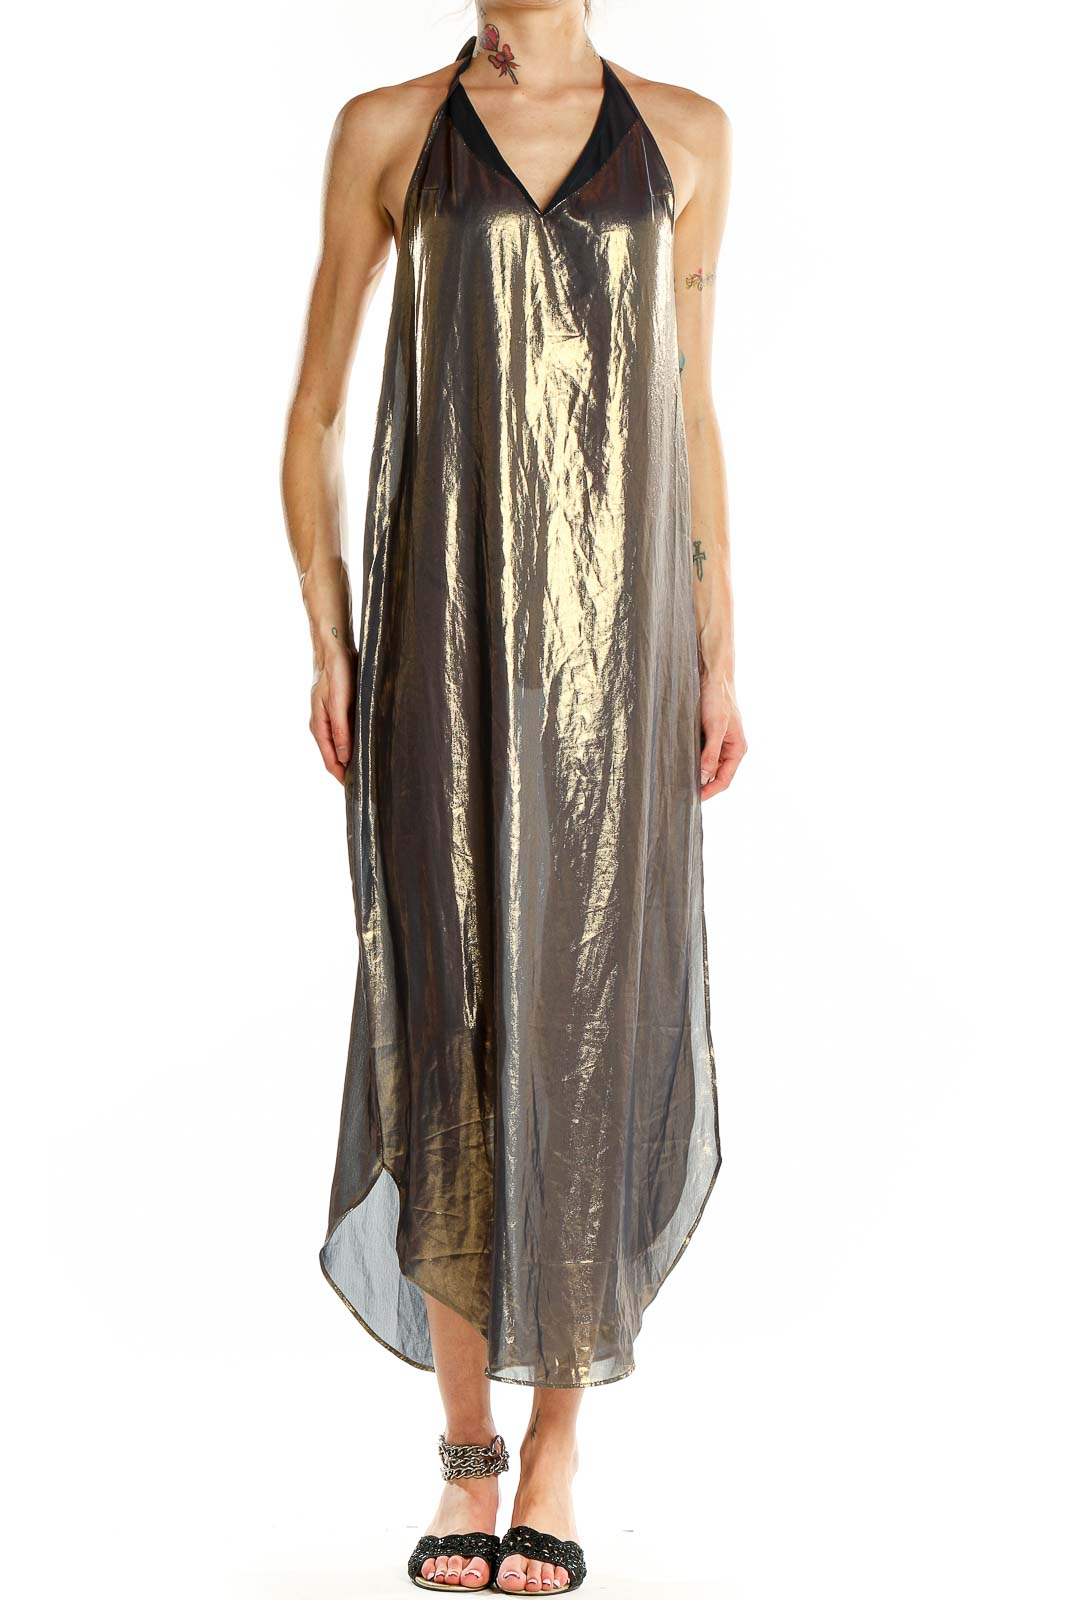 Gold Shimmer Semi- Sheer Halter Dress Front